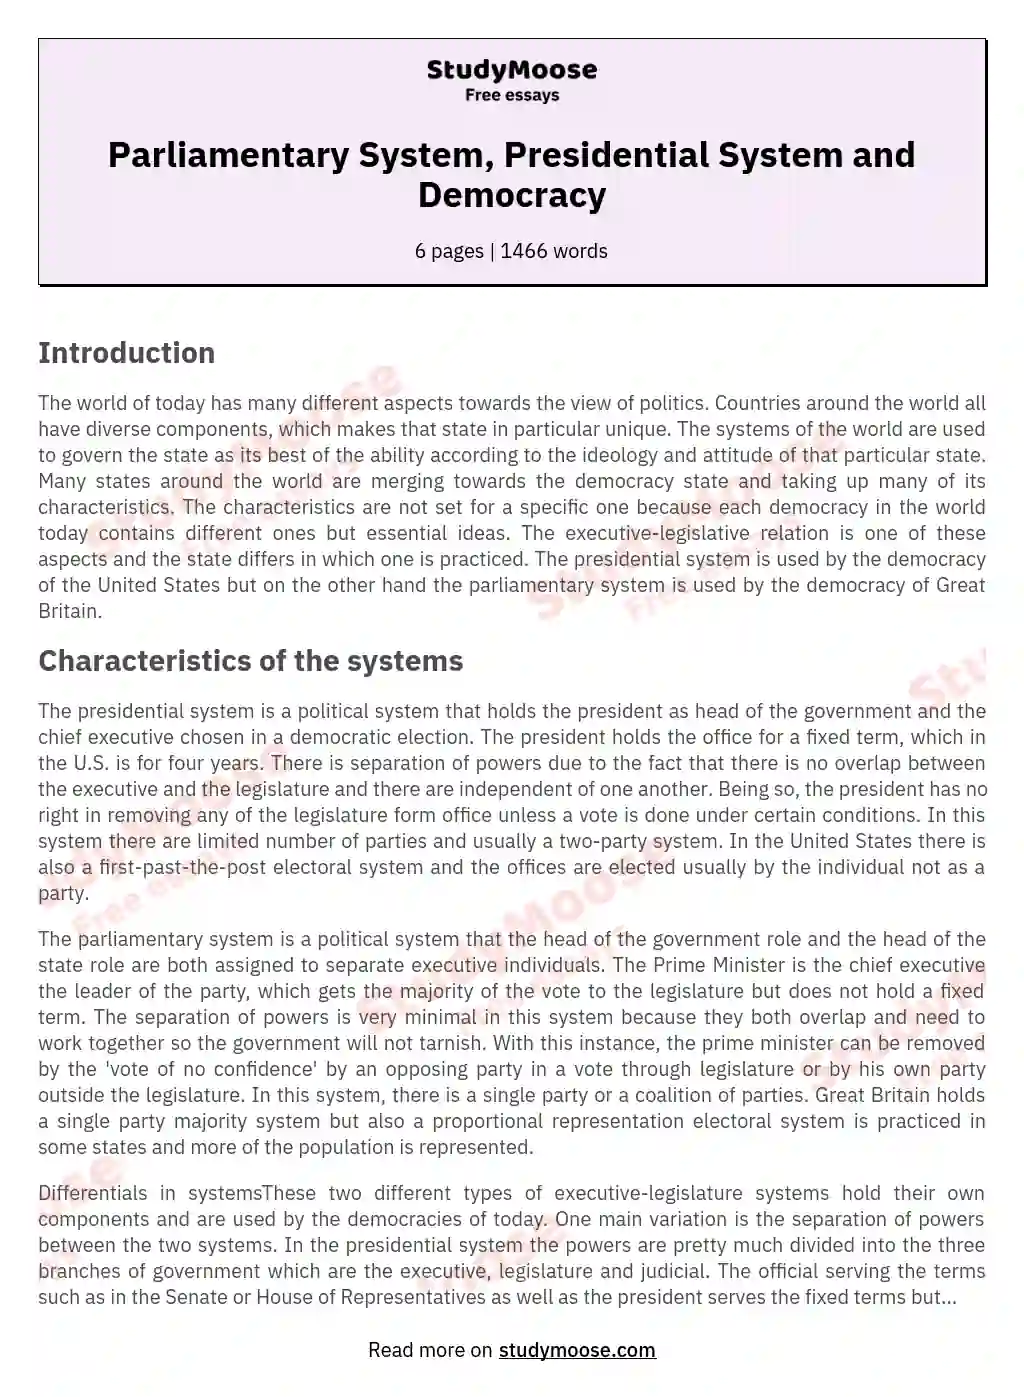 Parliamentary System, Presidential System and Democracy essay